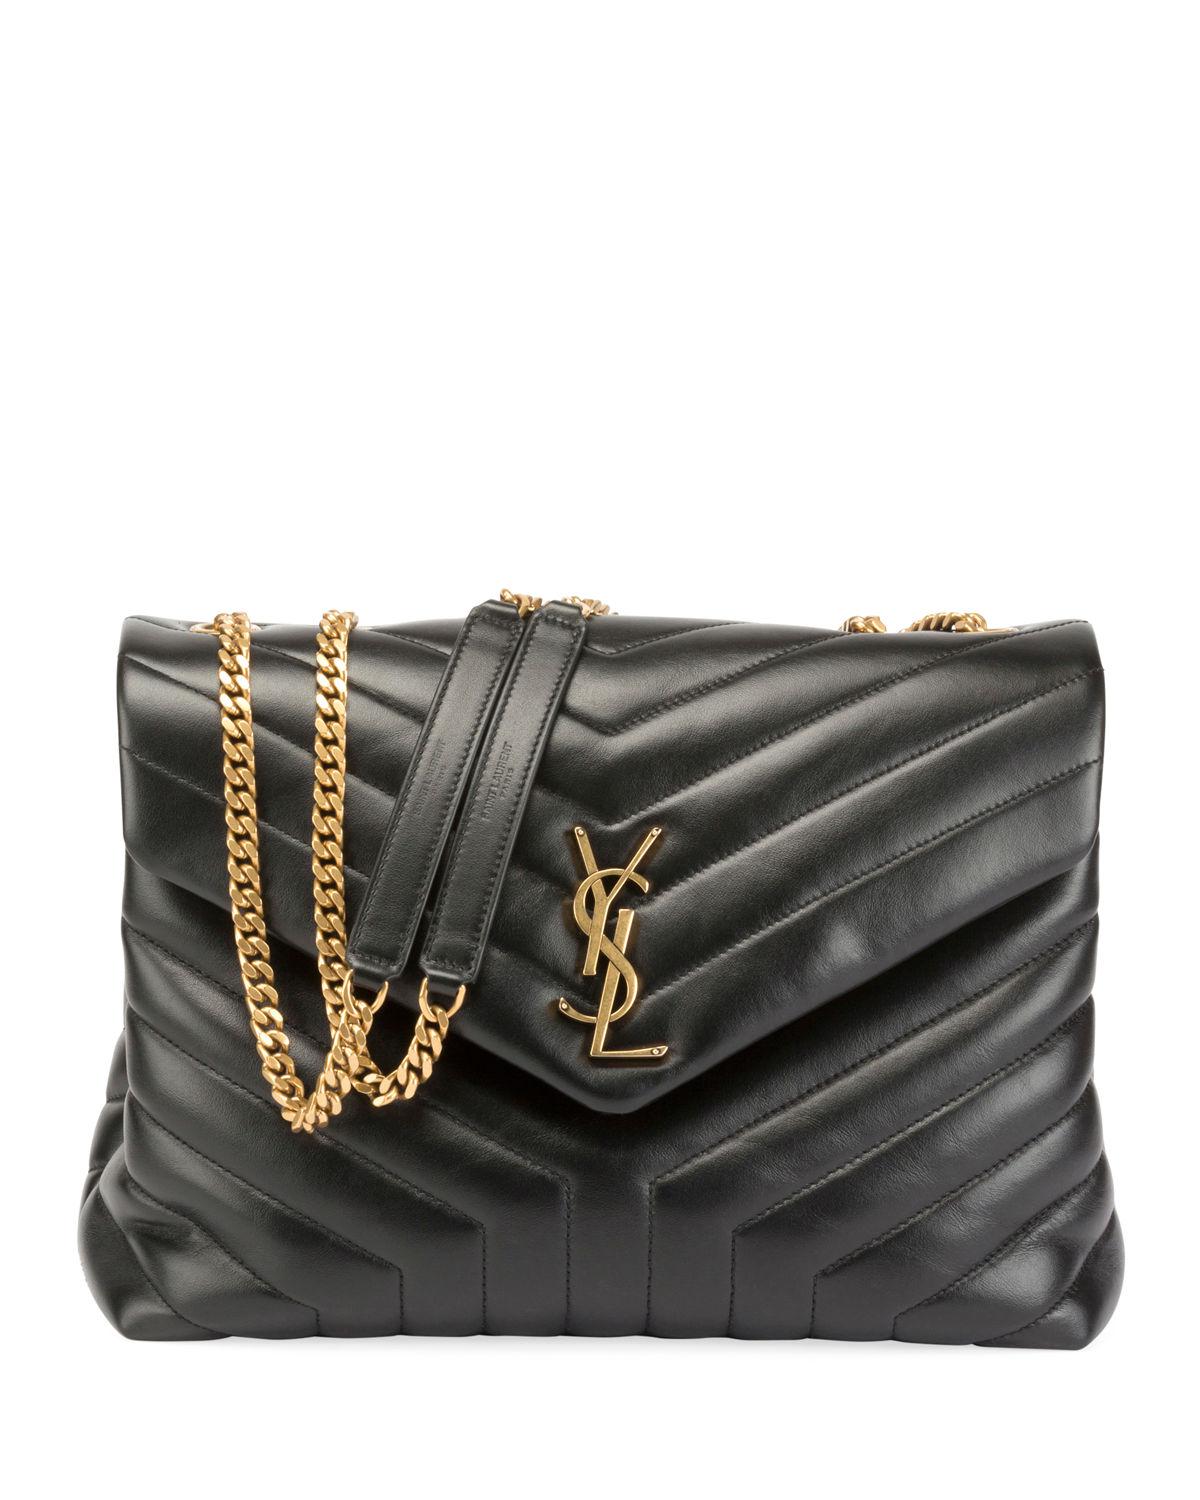 Saint Laurent Leather Loulou Monogram Ysl Medium Quilted V-flap Chain Shoulder Bag in Black - Lyst